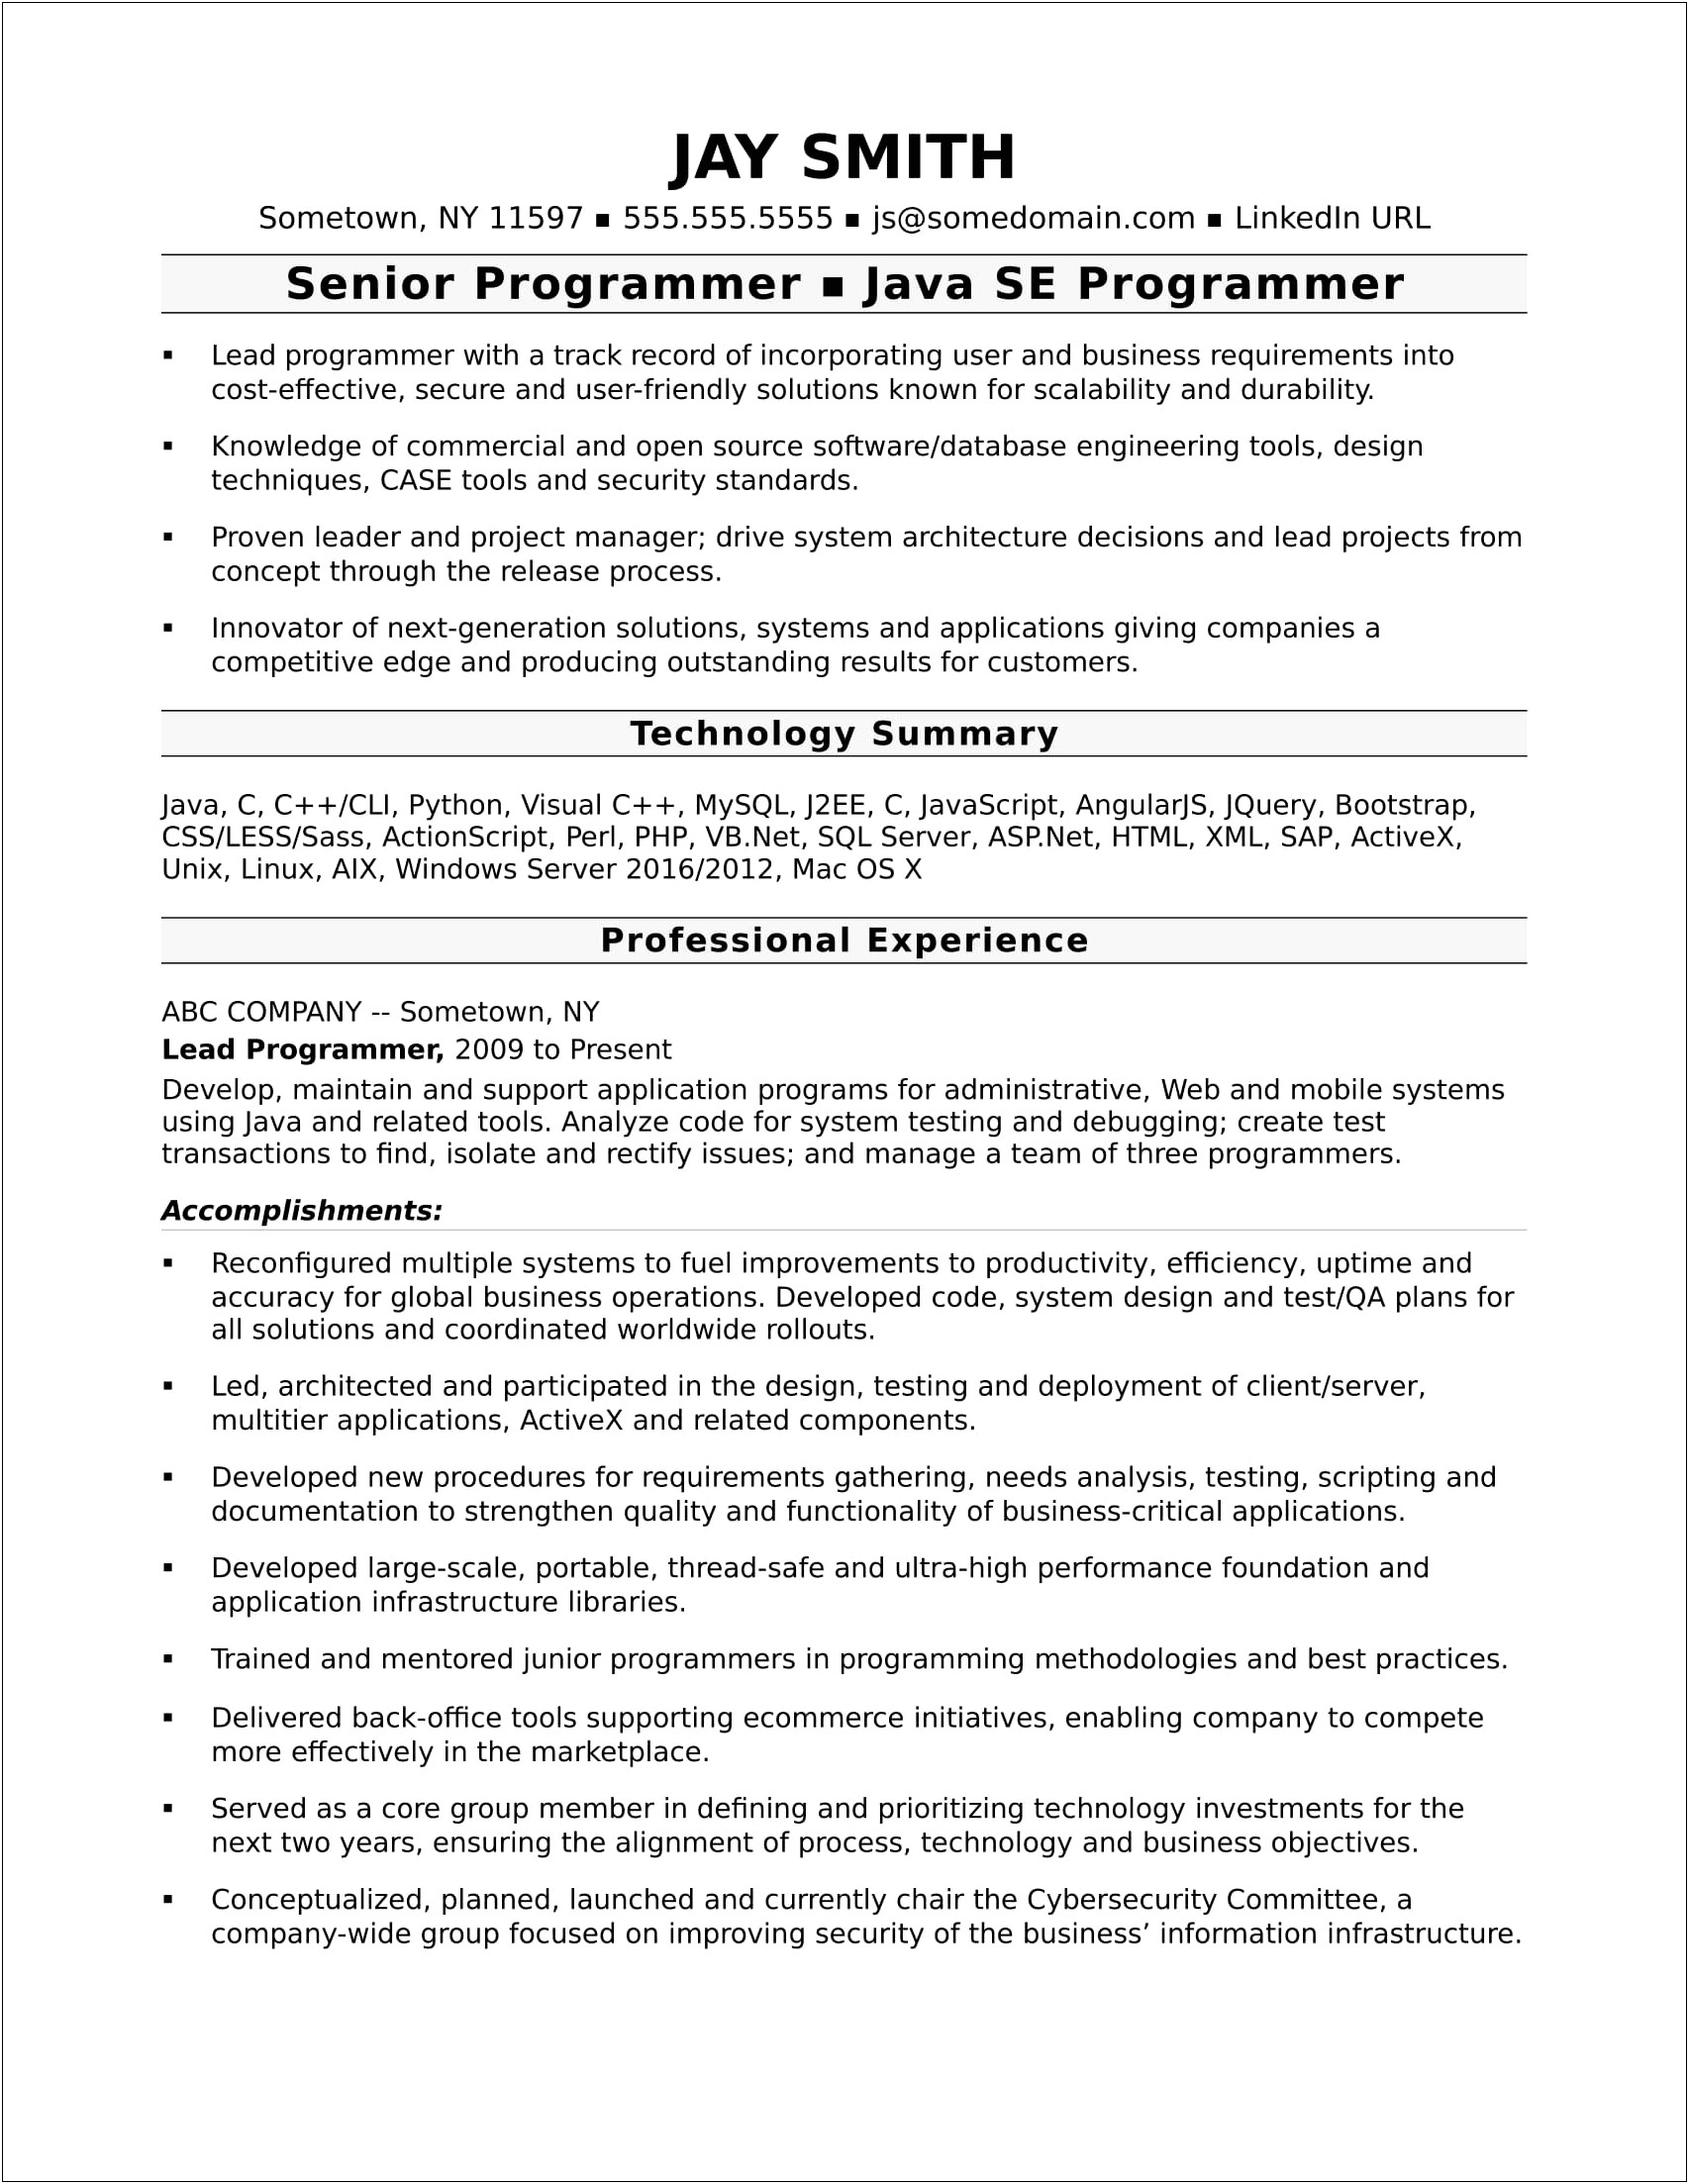 Sample Resume For Experienced Java Engineer